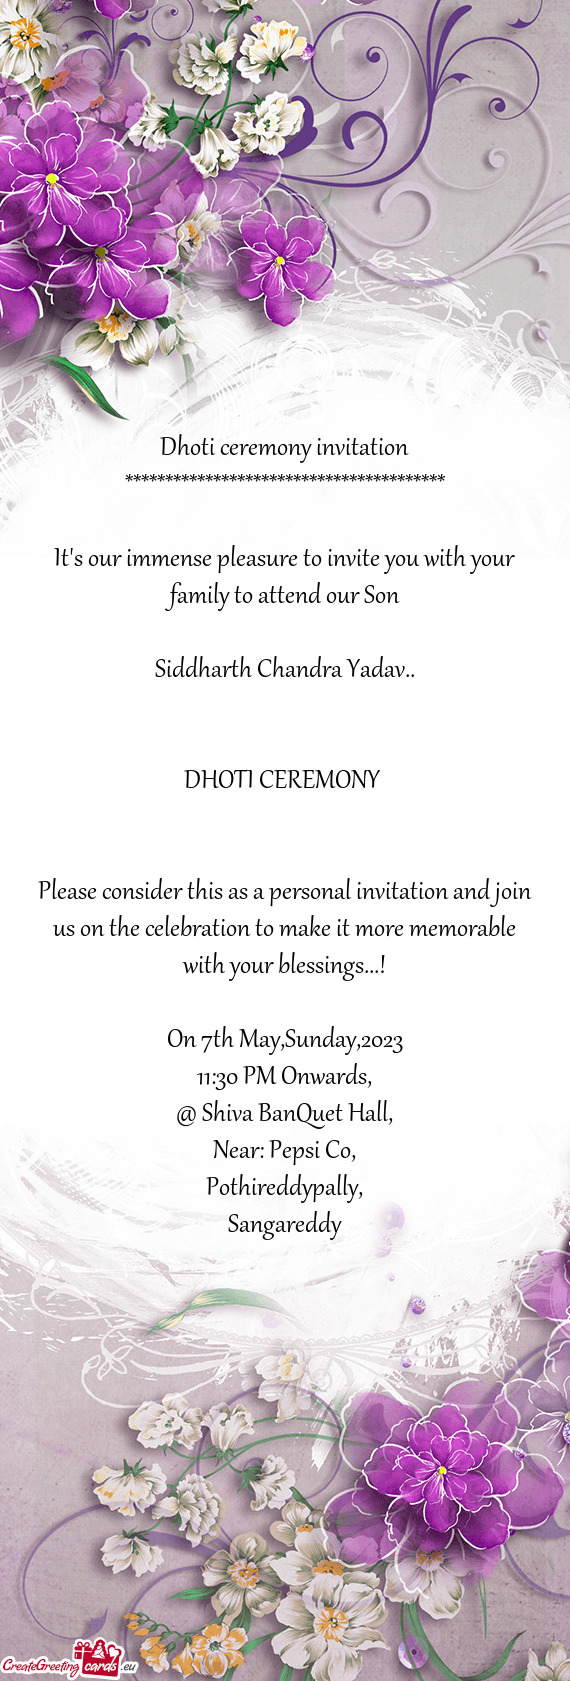 Siddharth Chandra Yadav